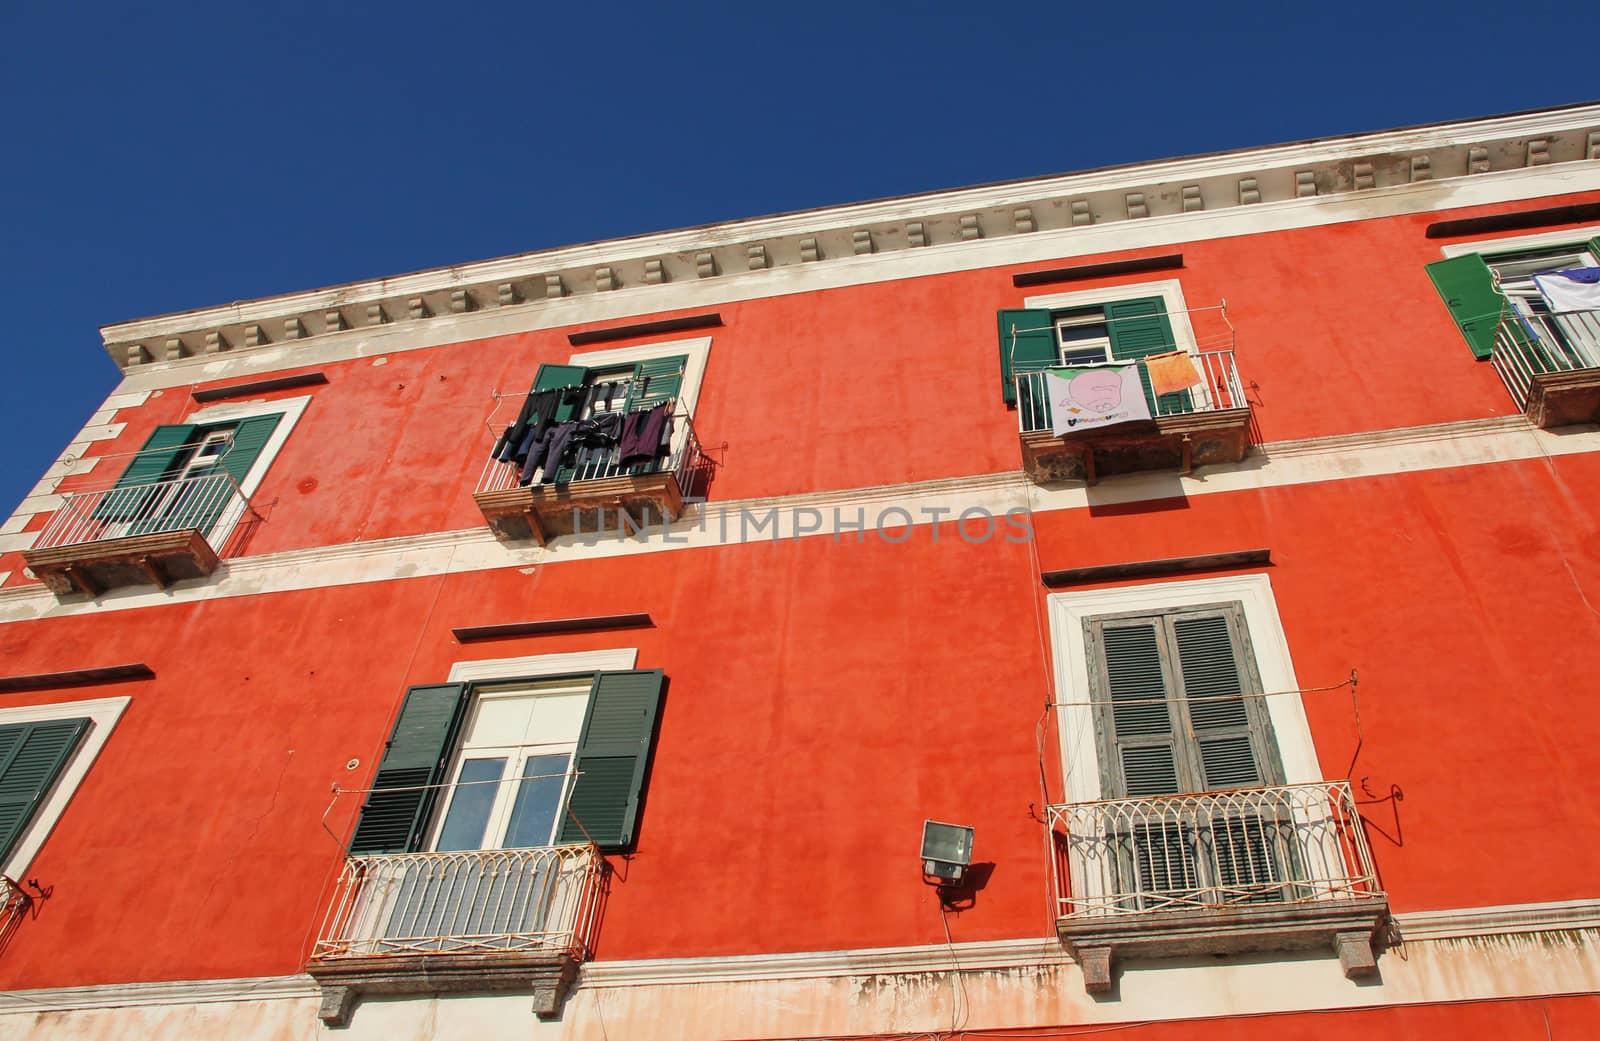 Italy. Campania region. Procida island. Mediterranean orange ochre house facade 